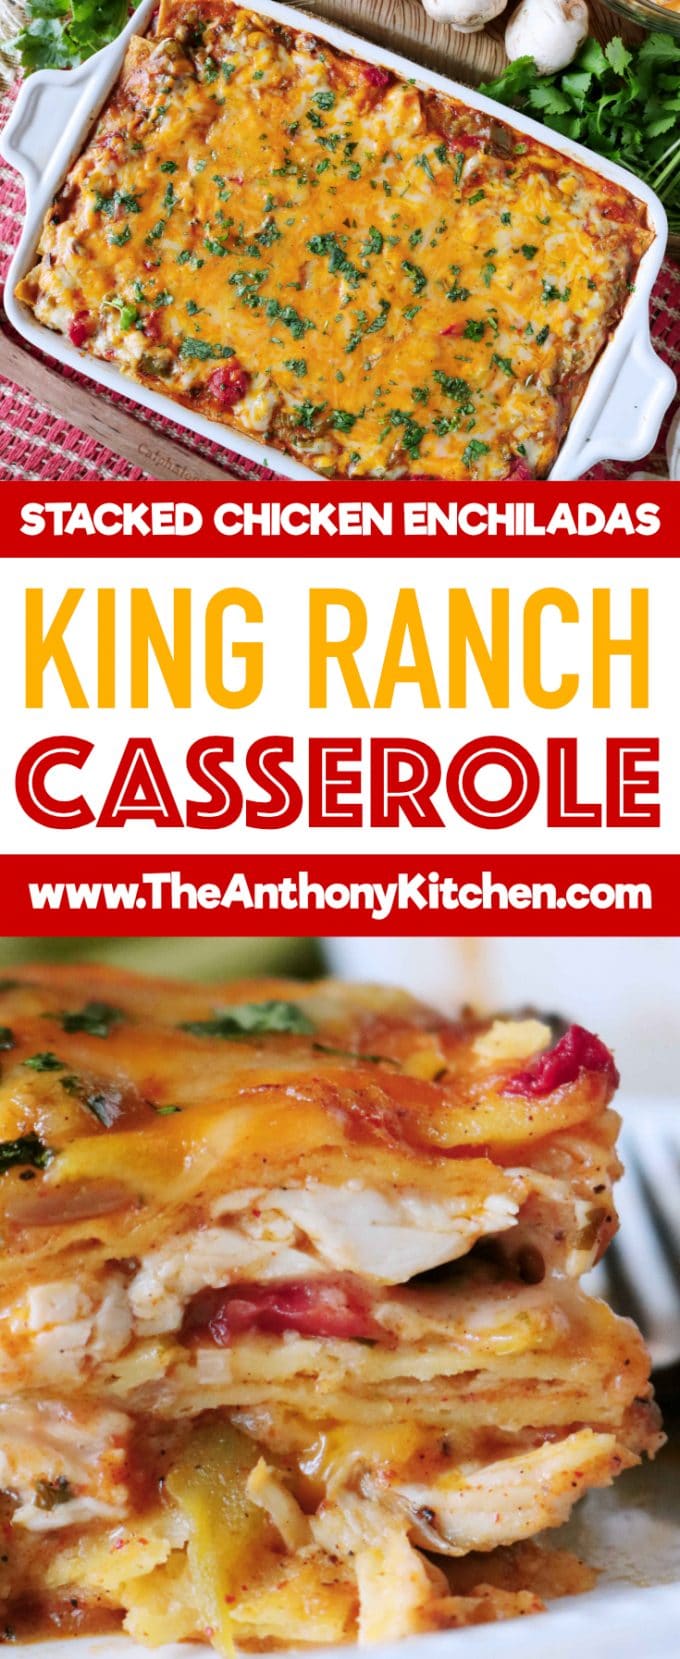 PInterest image of Stacked Enchilada Casserole | King Ranch Casserole